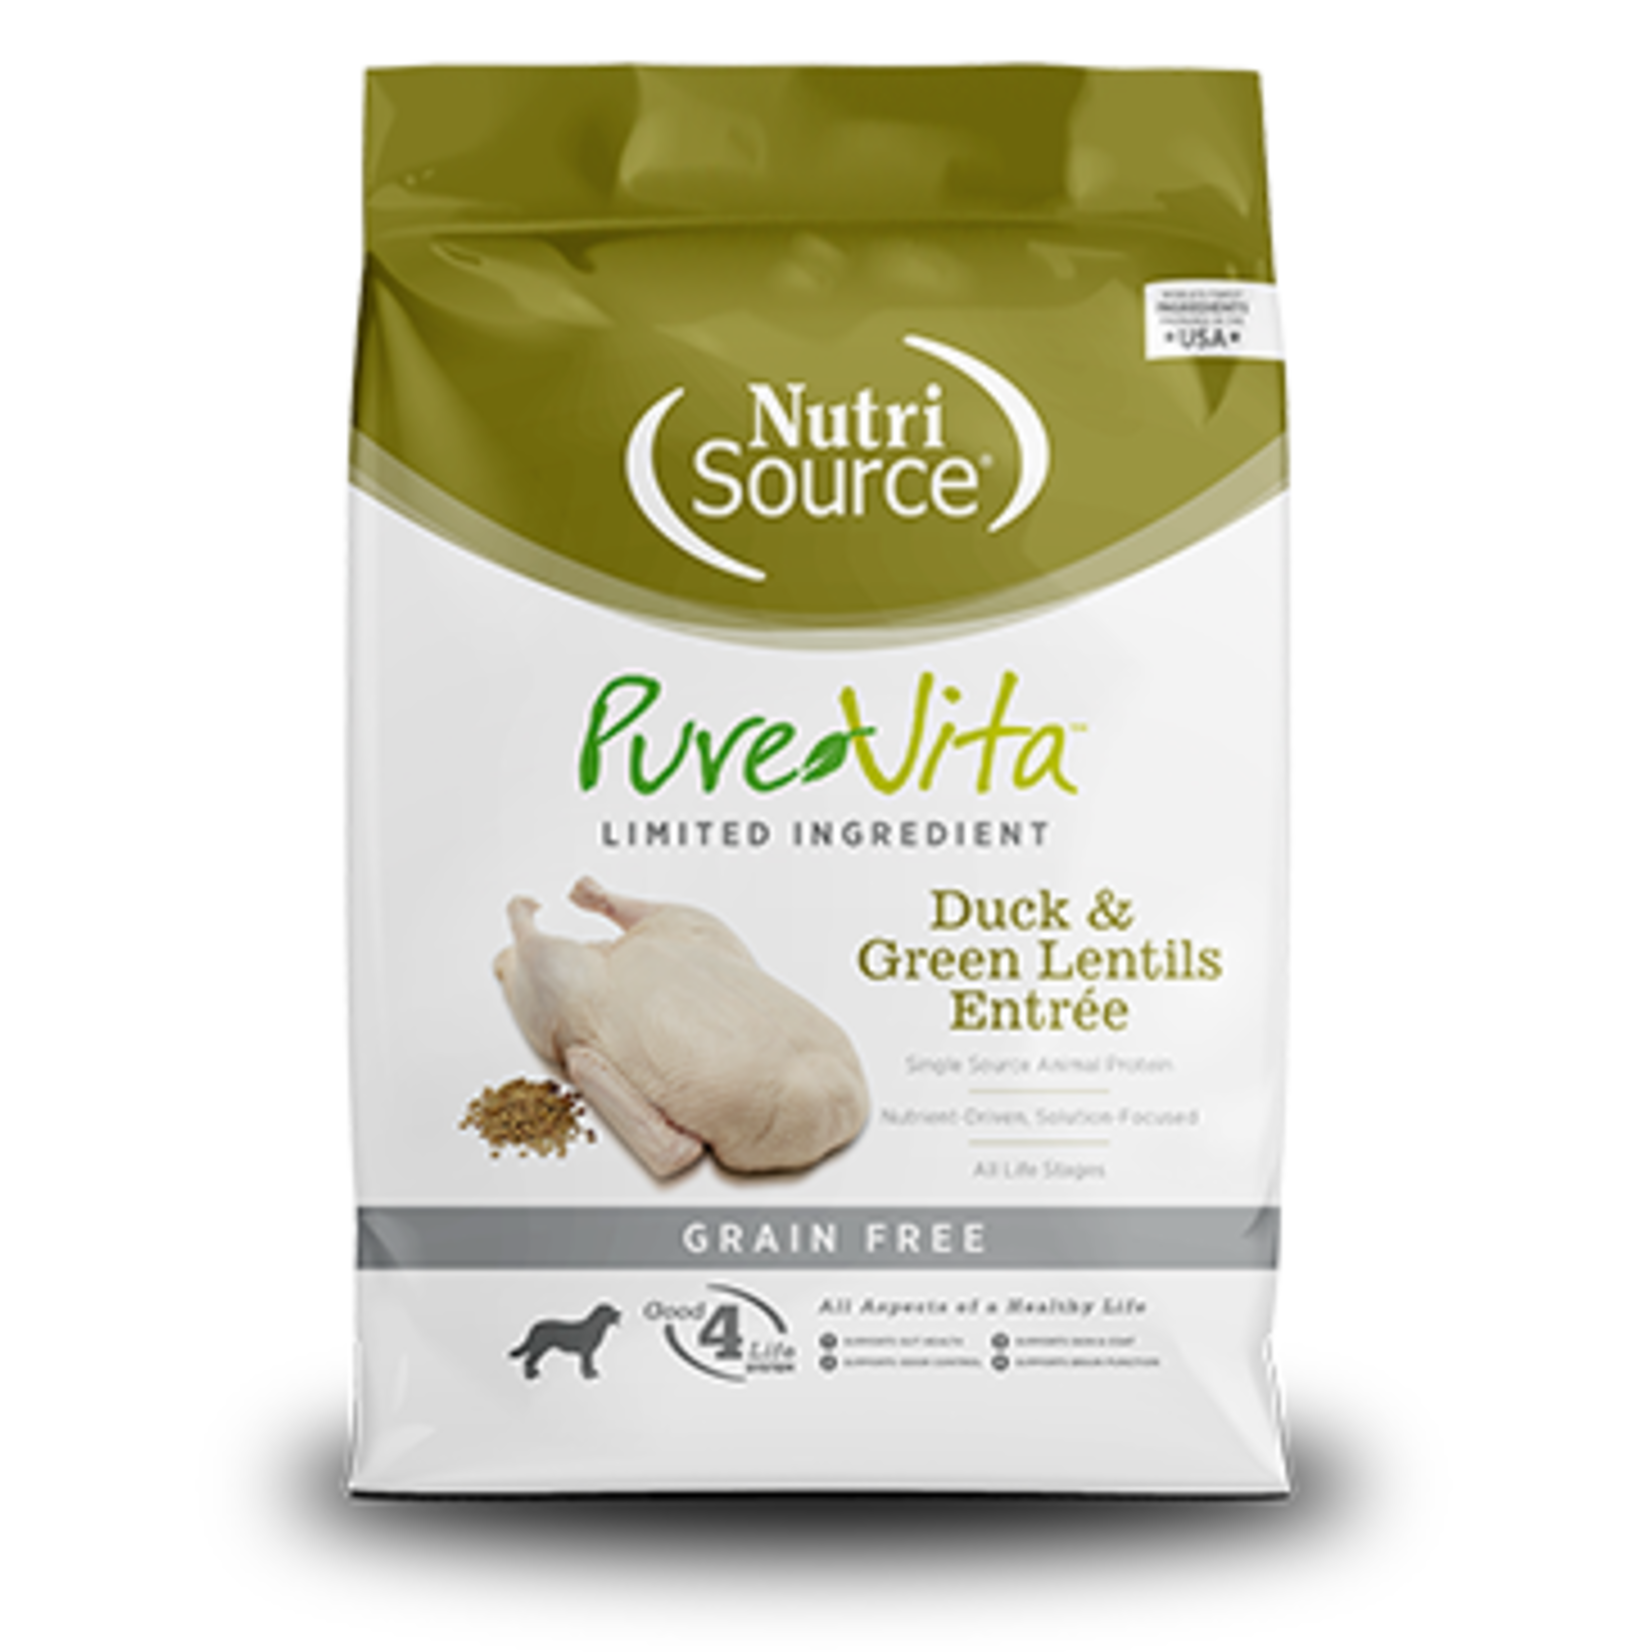 Nutri-Source Canard & Lentiles vertes - PureVita - S Grain - 5 lbs